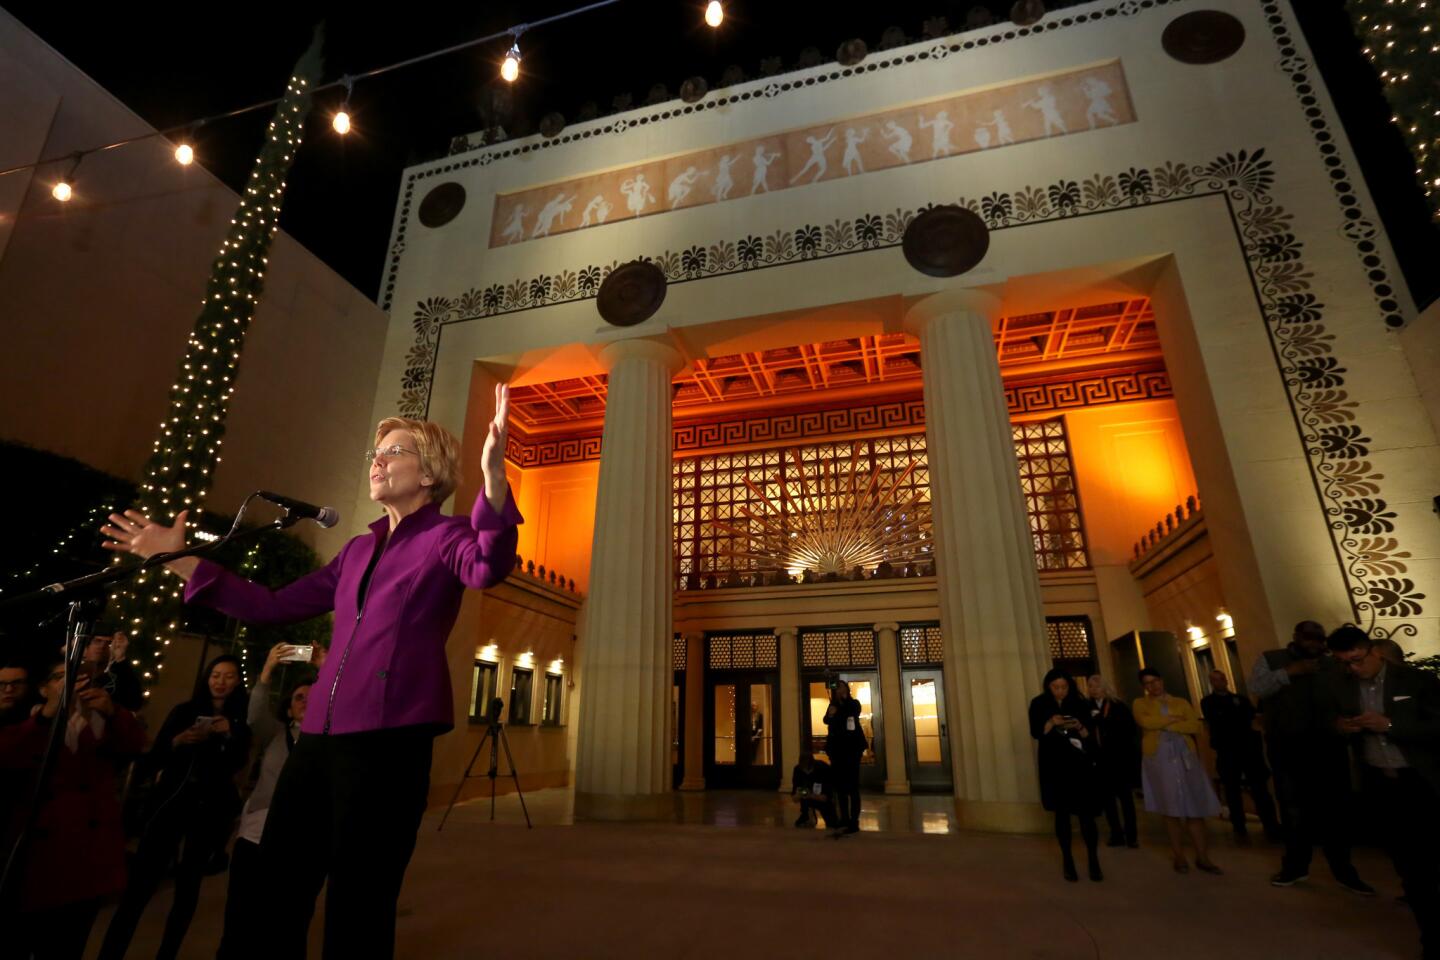 Photo Gallery: Senator and democratic presidential candidate Elizabeth Warren speaks at the Alex Theater